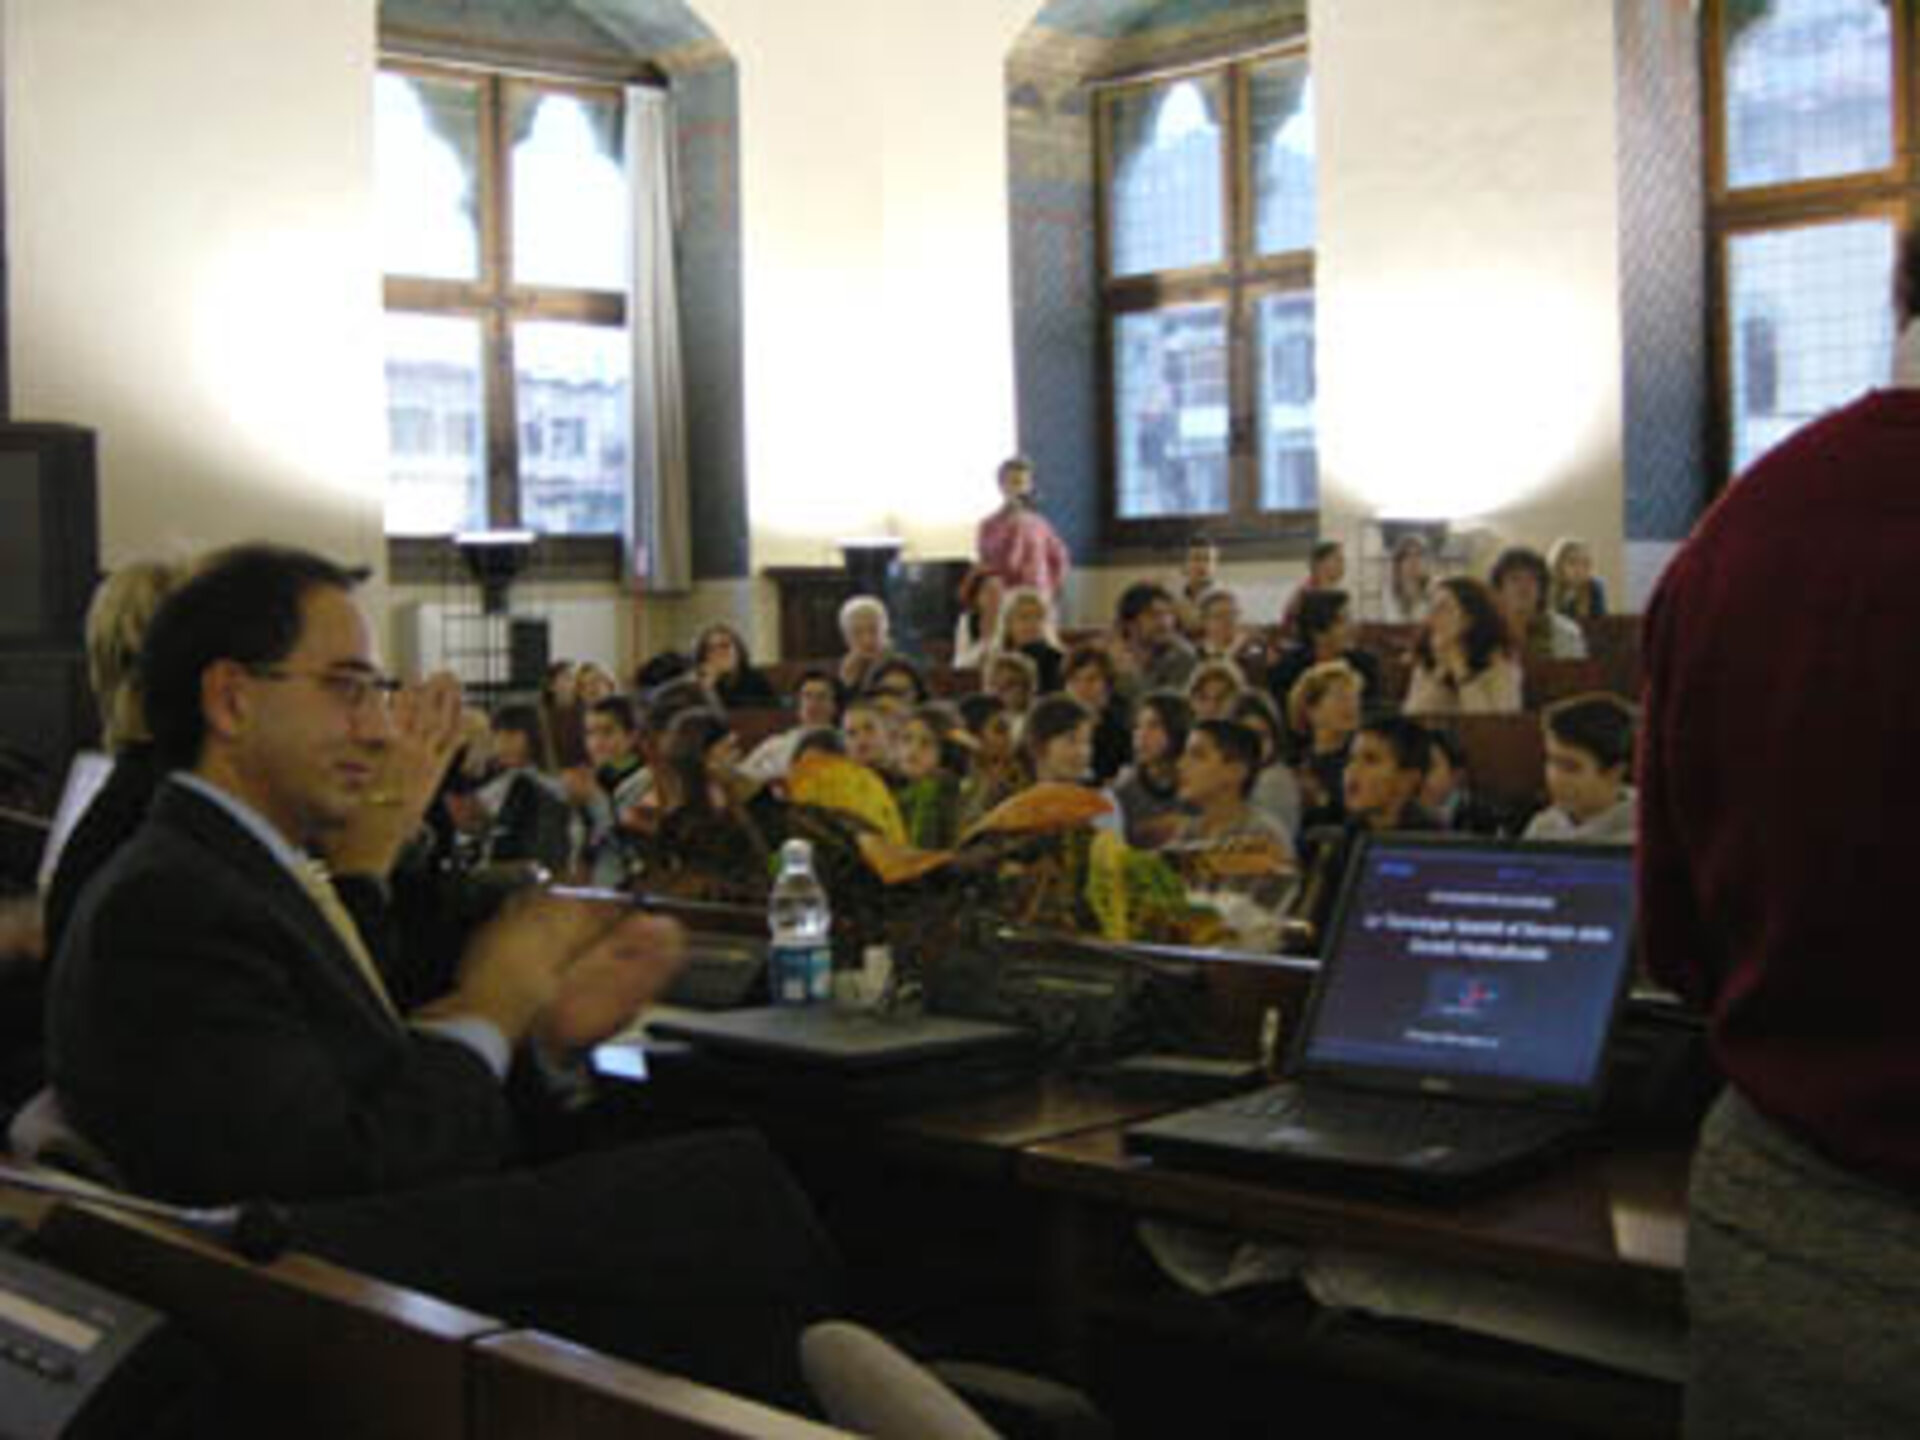 Paolo Bellofiore from Telespazio (left) gave a presentation on Advanced Satellite Distance Learning